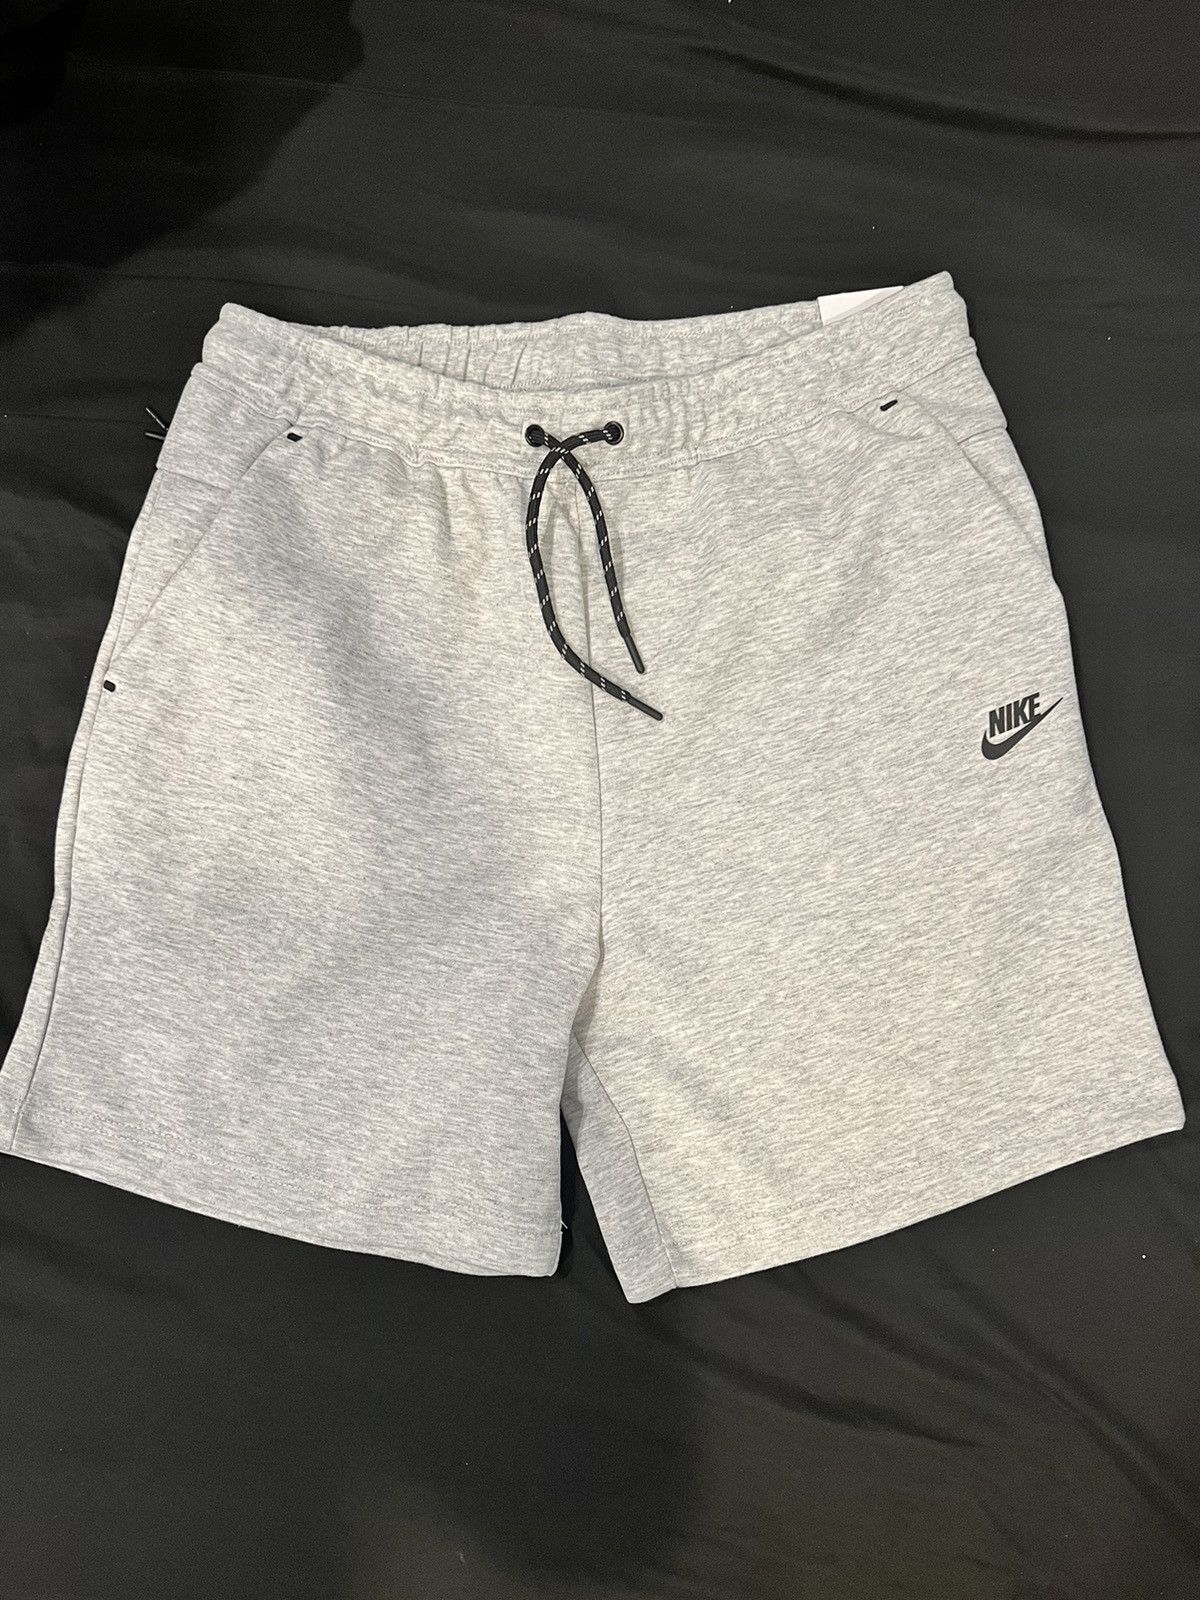 Nike Nike Tech Fleece Shorts | Grailed